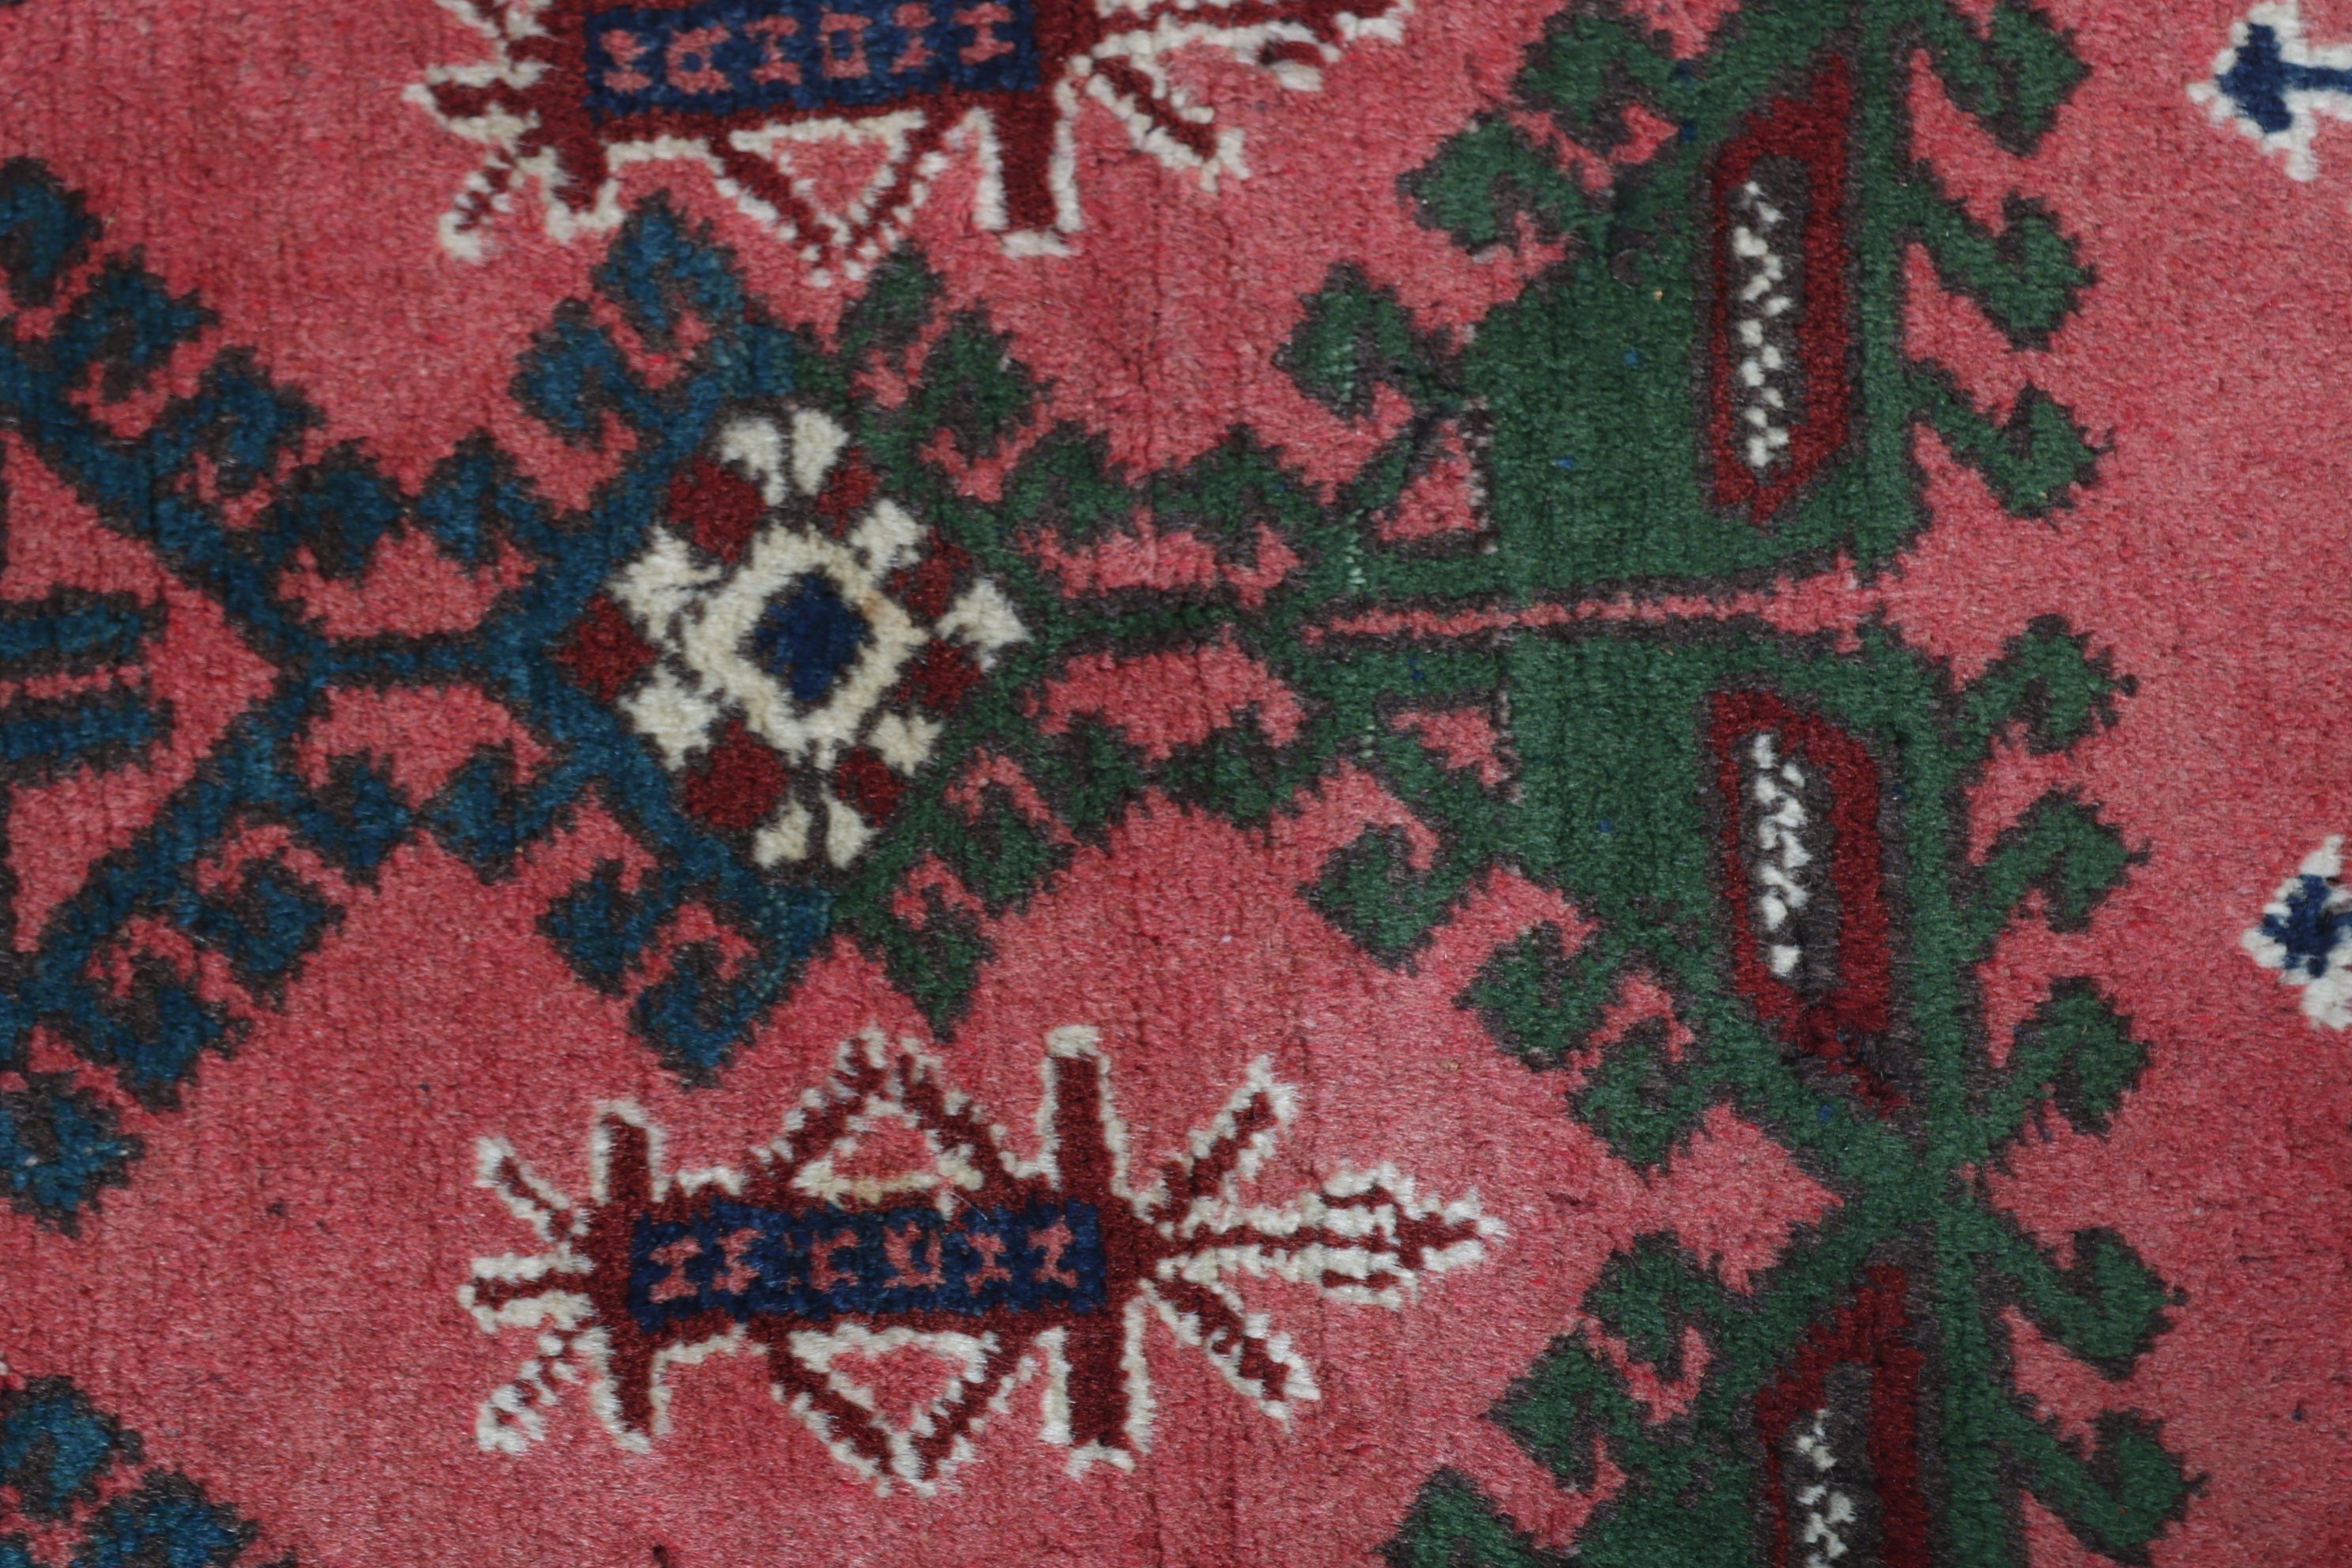 Turkish Rug, Wall Hanging Rug, Kitchen Rug, Bedroom Rug, Pink Moroccan Rug, Vintage Rug, Boho Rug, Home Decor Rugs, 1.7x2 ft Small Rug